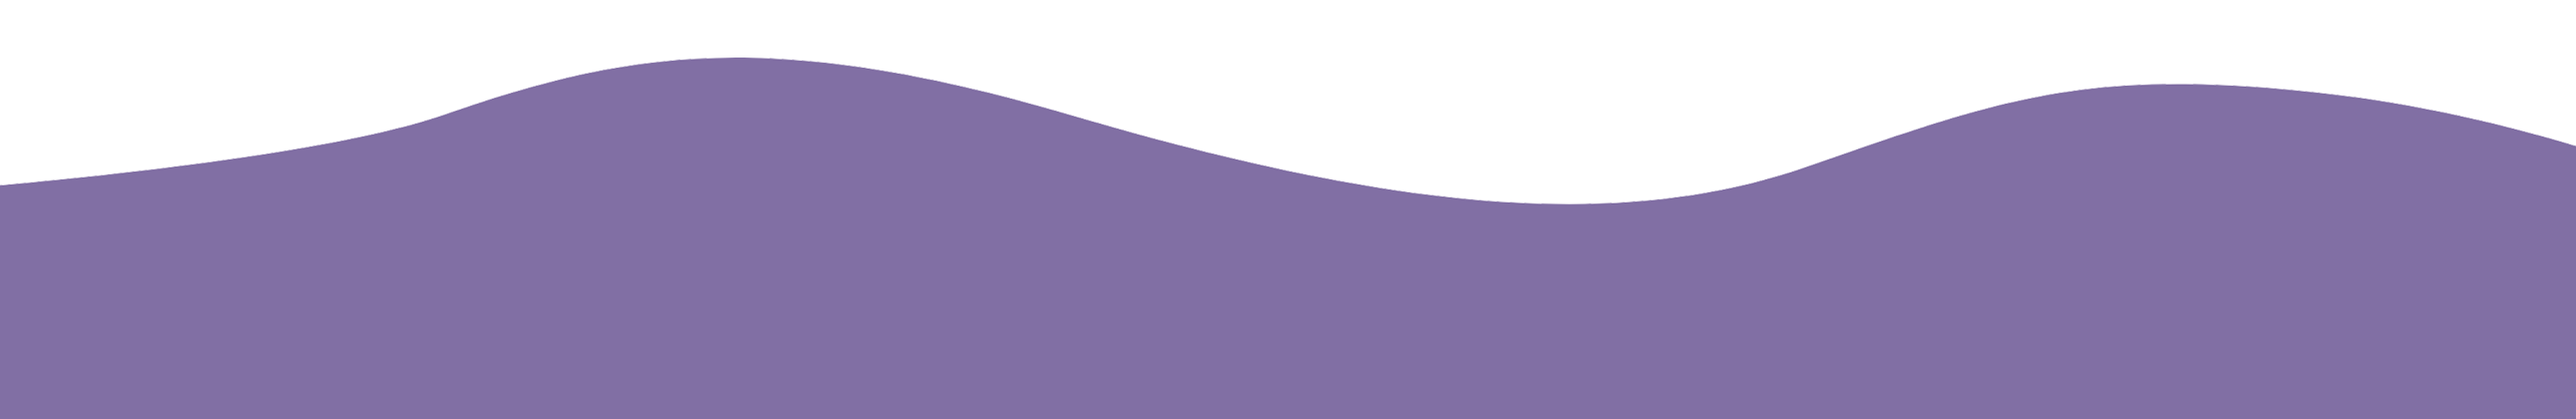 slider_purple_curve_3